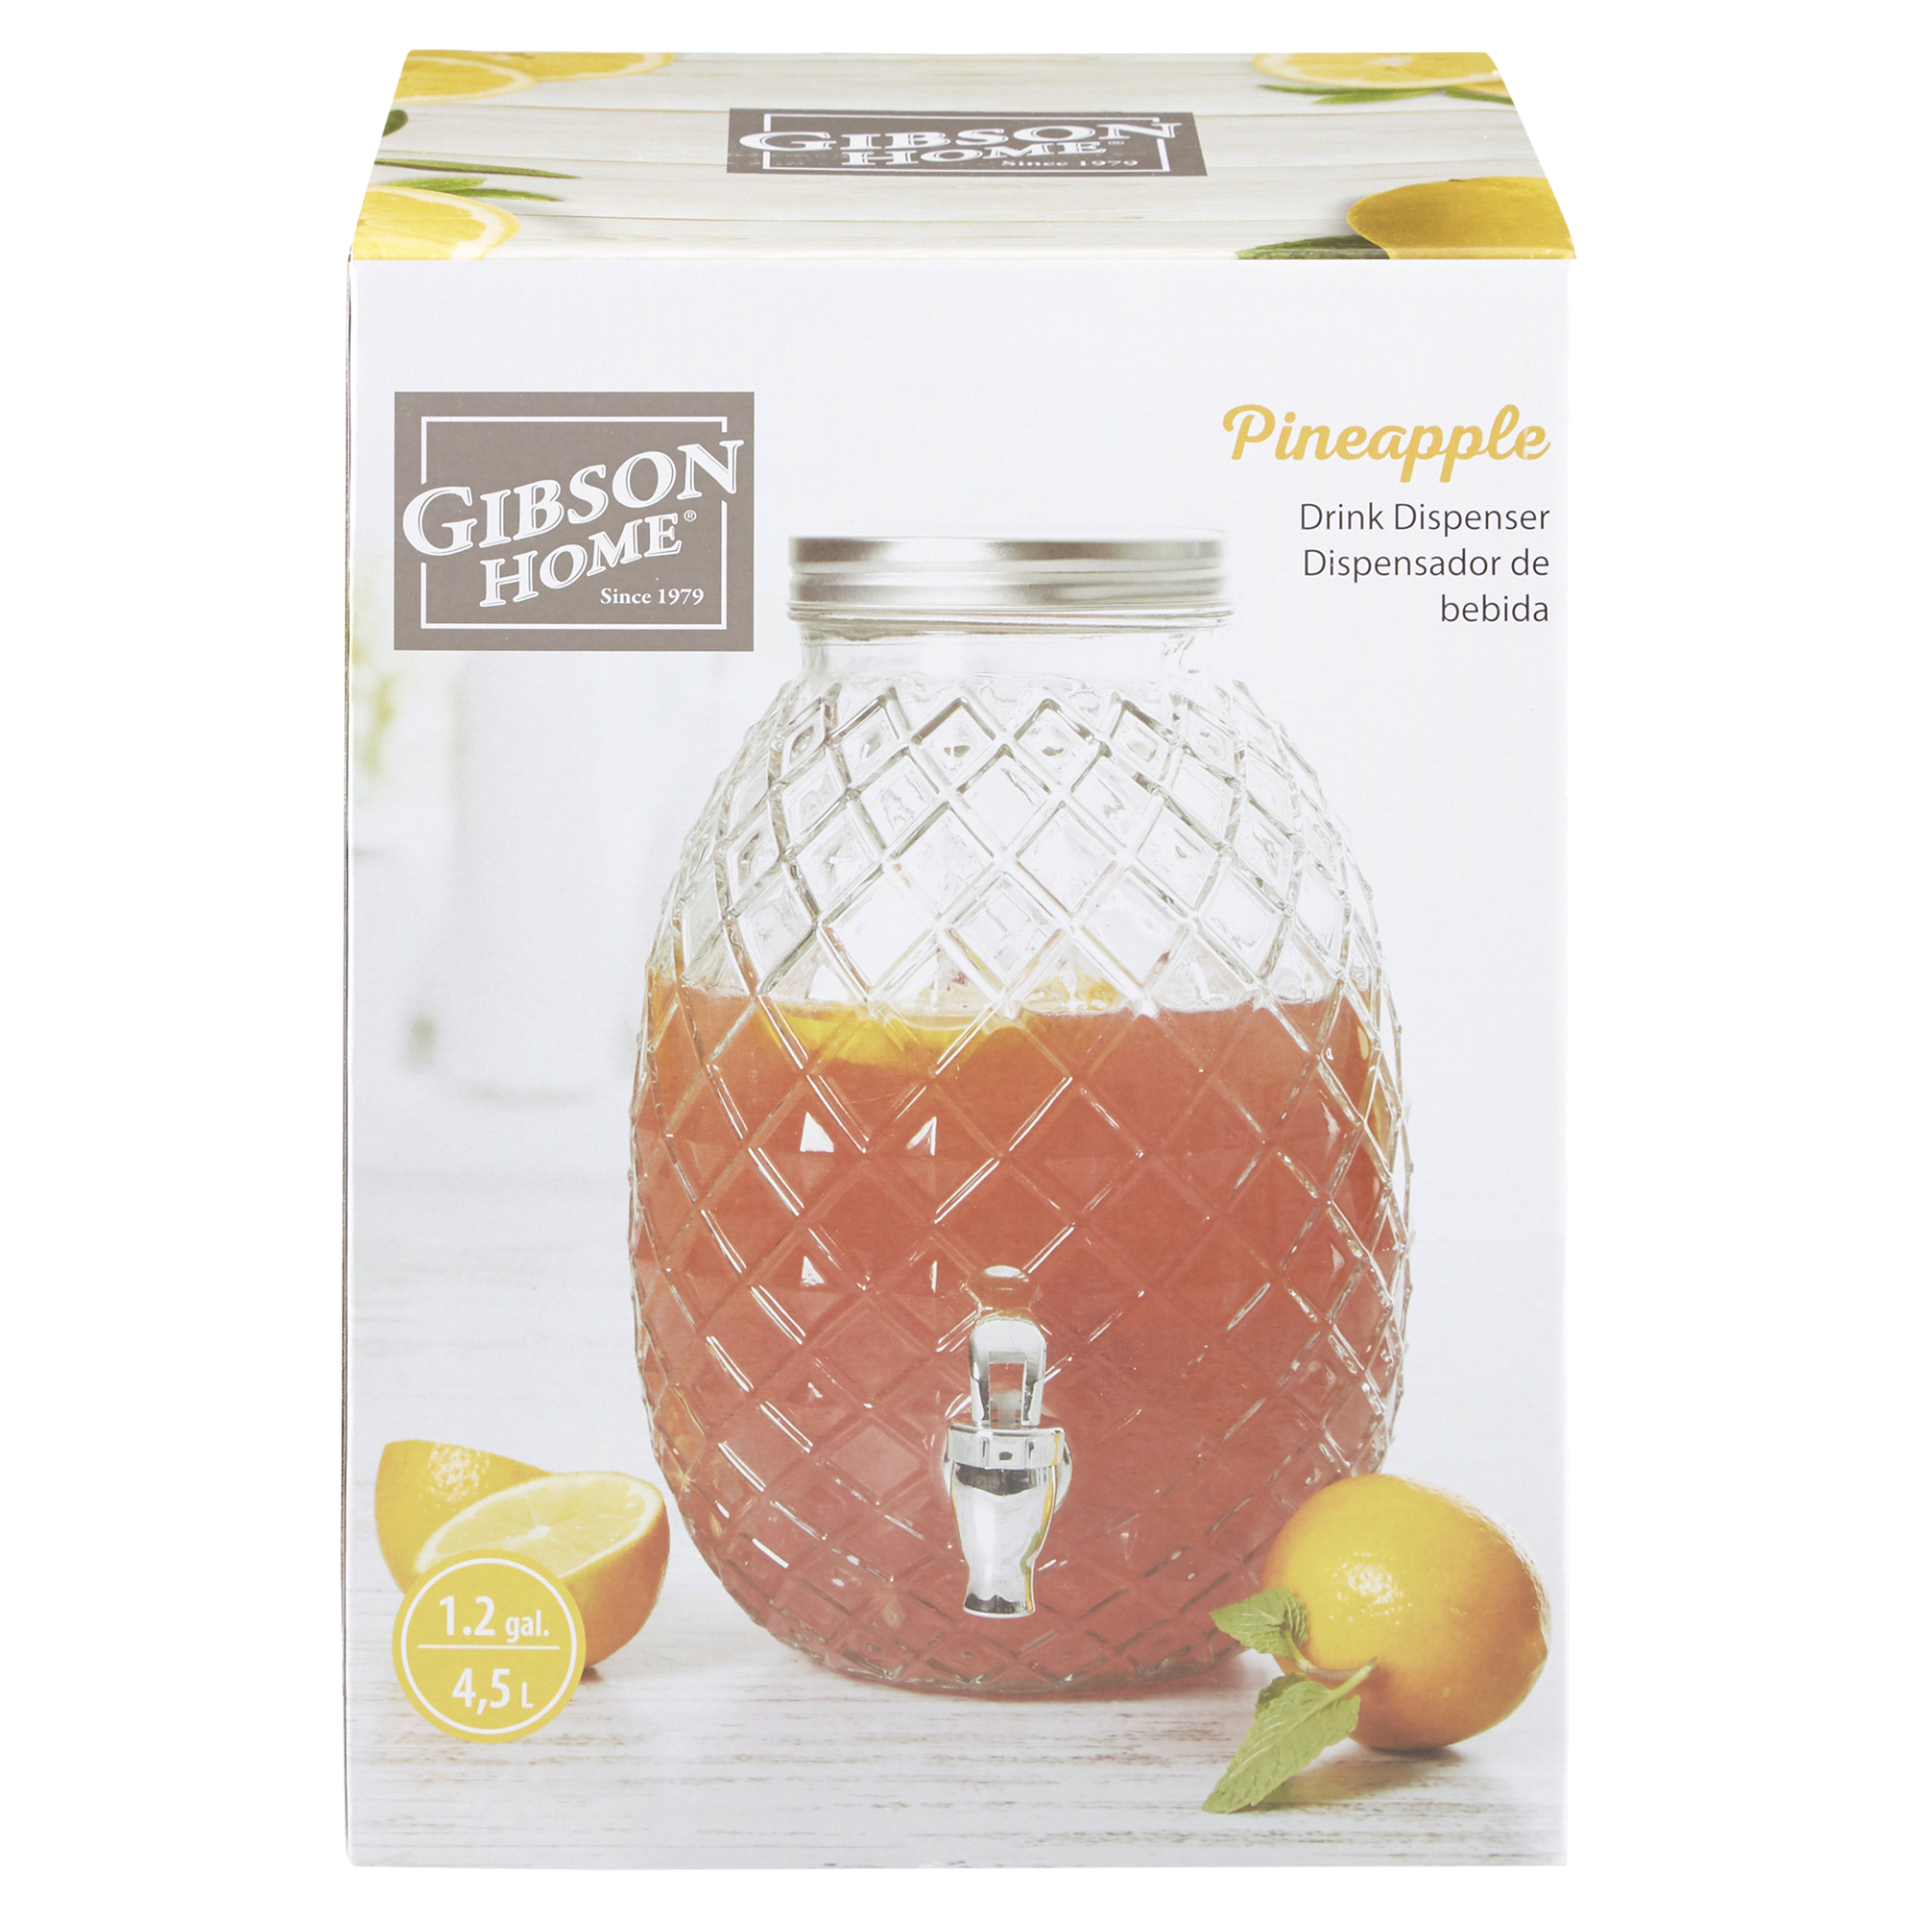 Gibson Clear Glass Drink Dispenser Beverage Serveware in Pineapple